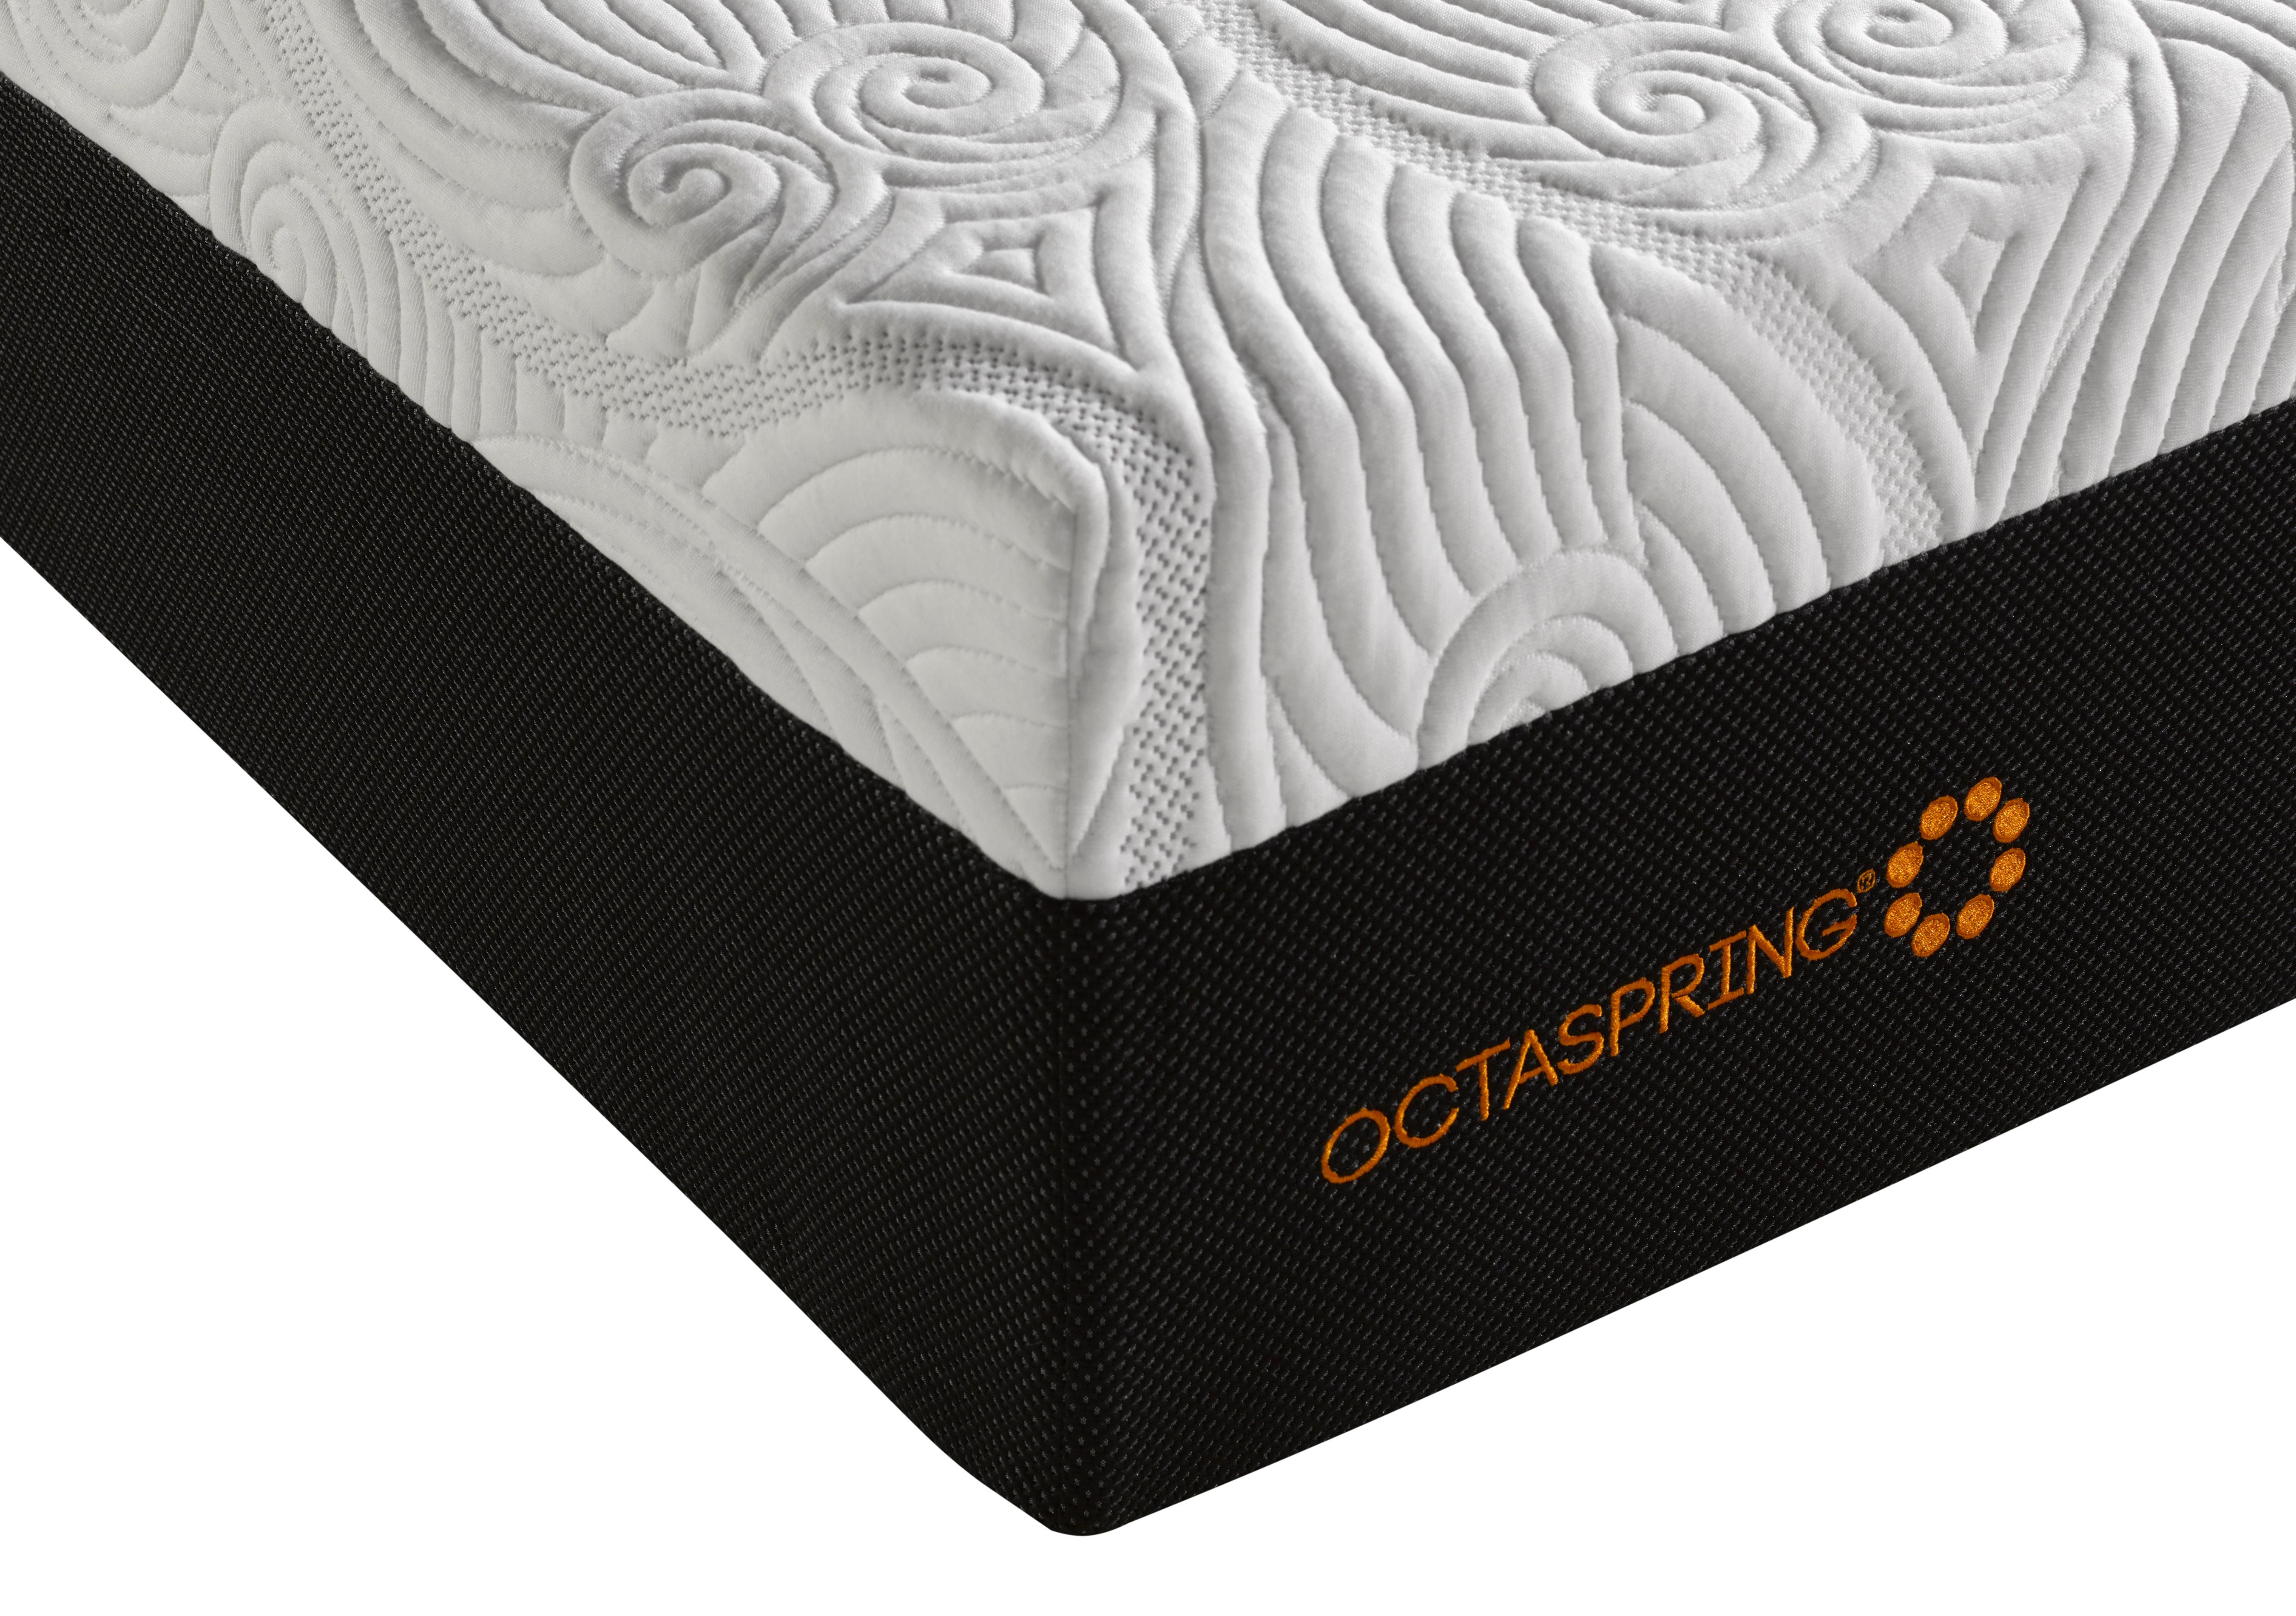 dormeo octaspring 8500 king mattress